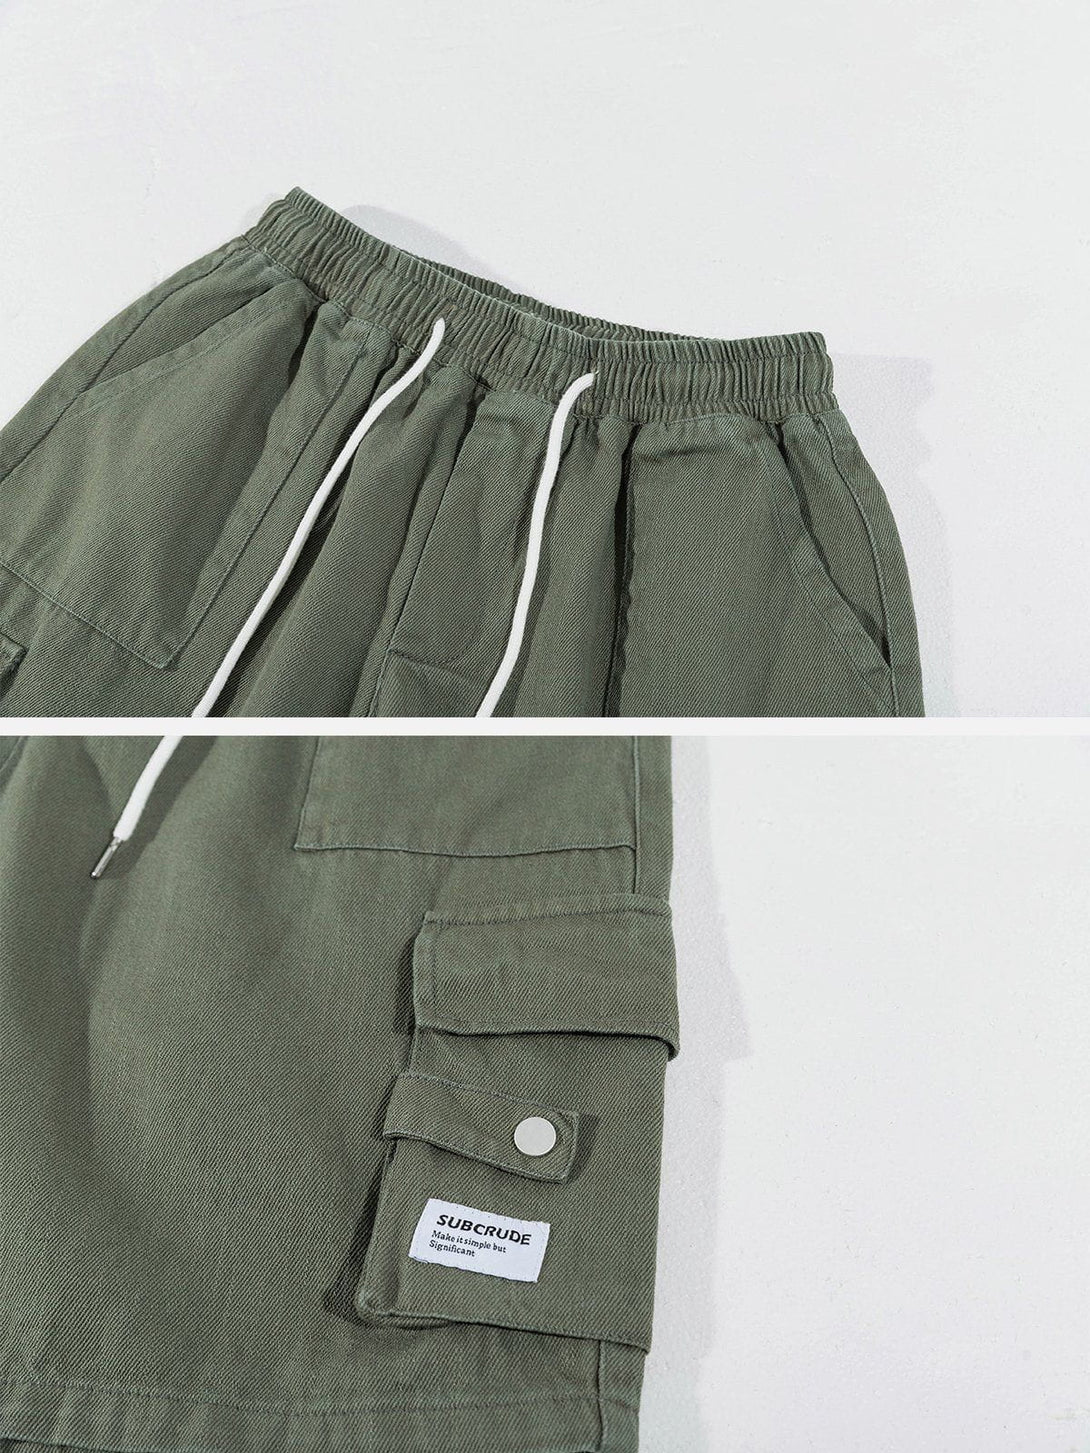 Majesda® - Large Pocket Patchwork Shorts outfit ideas streetwear fashion